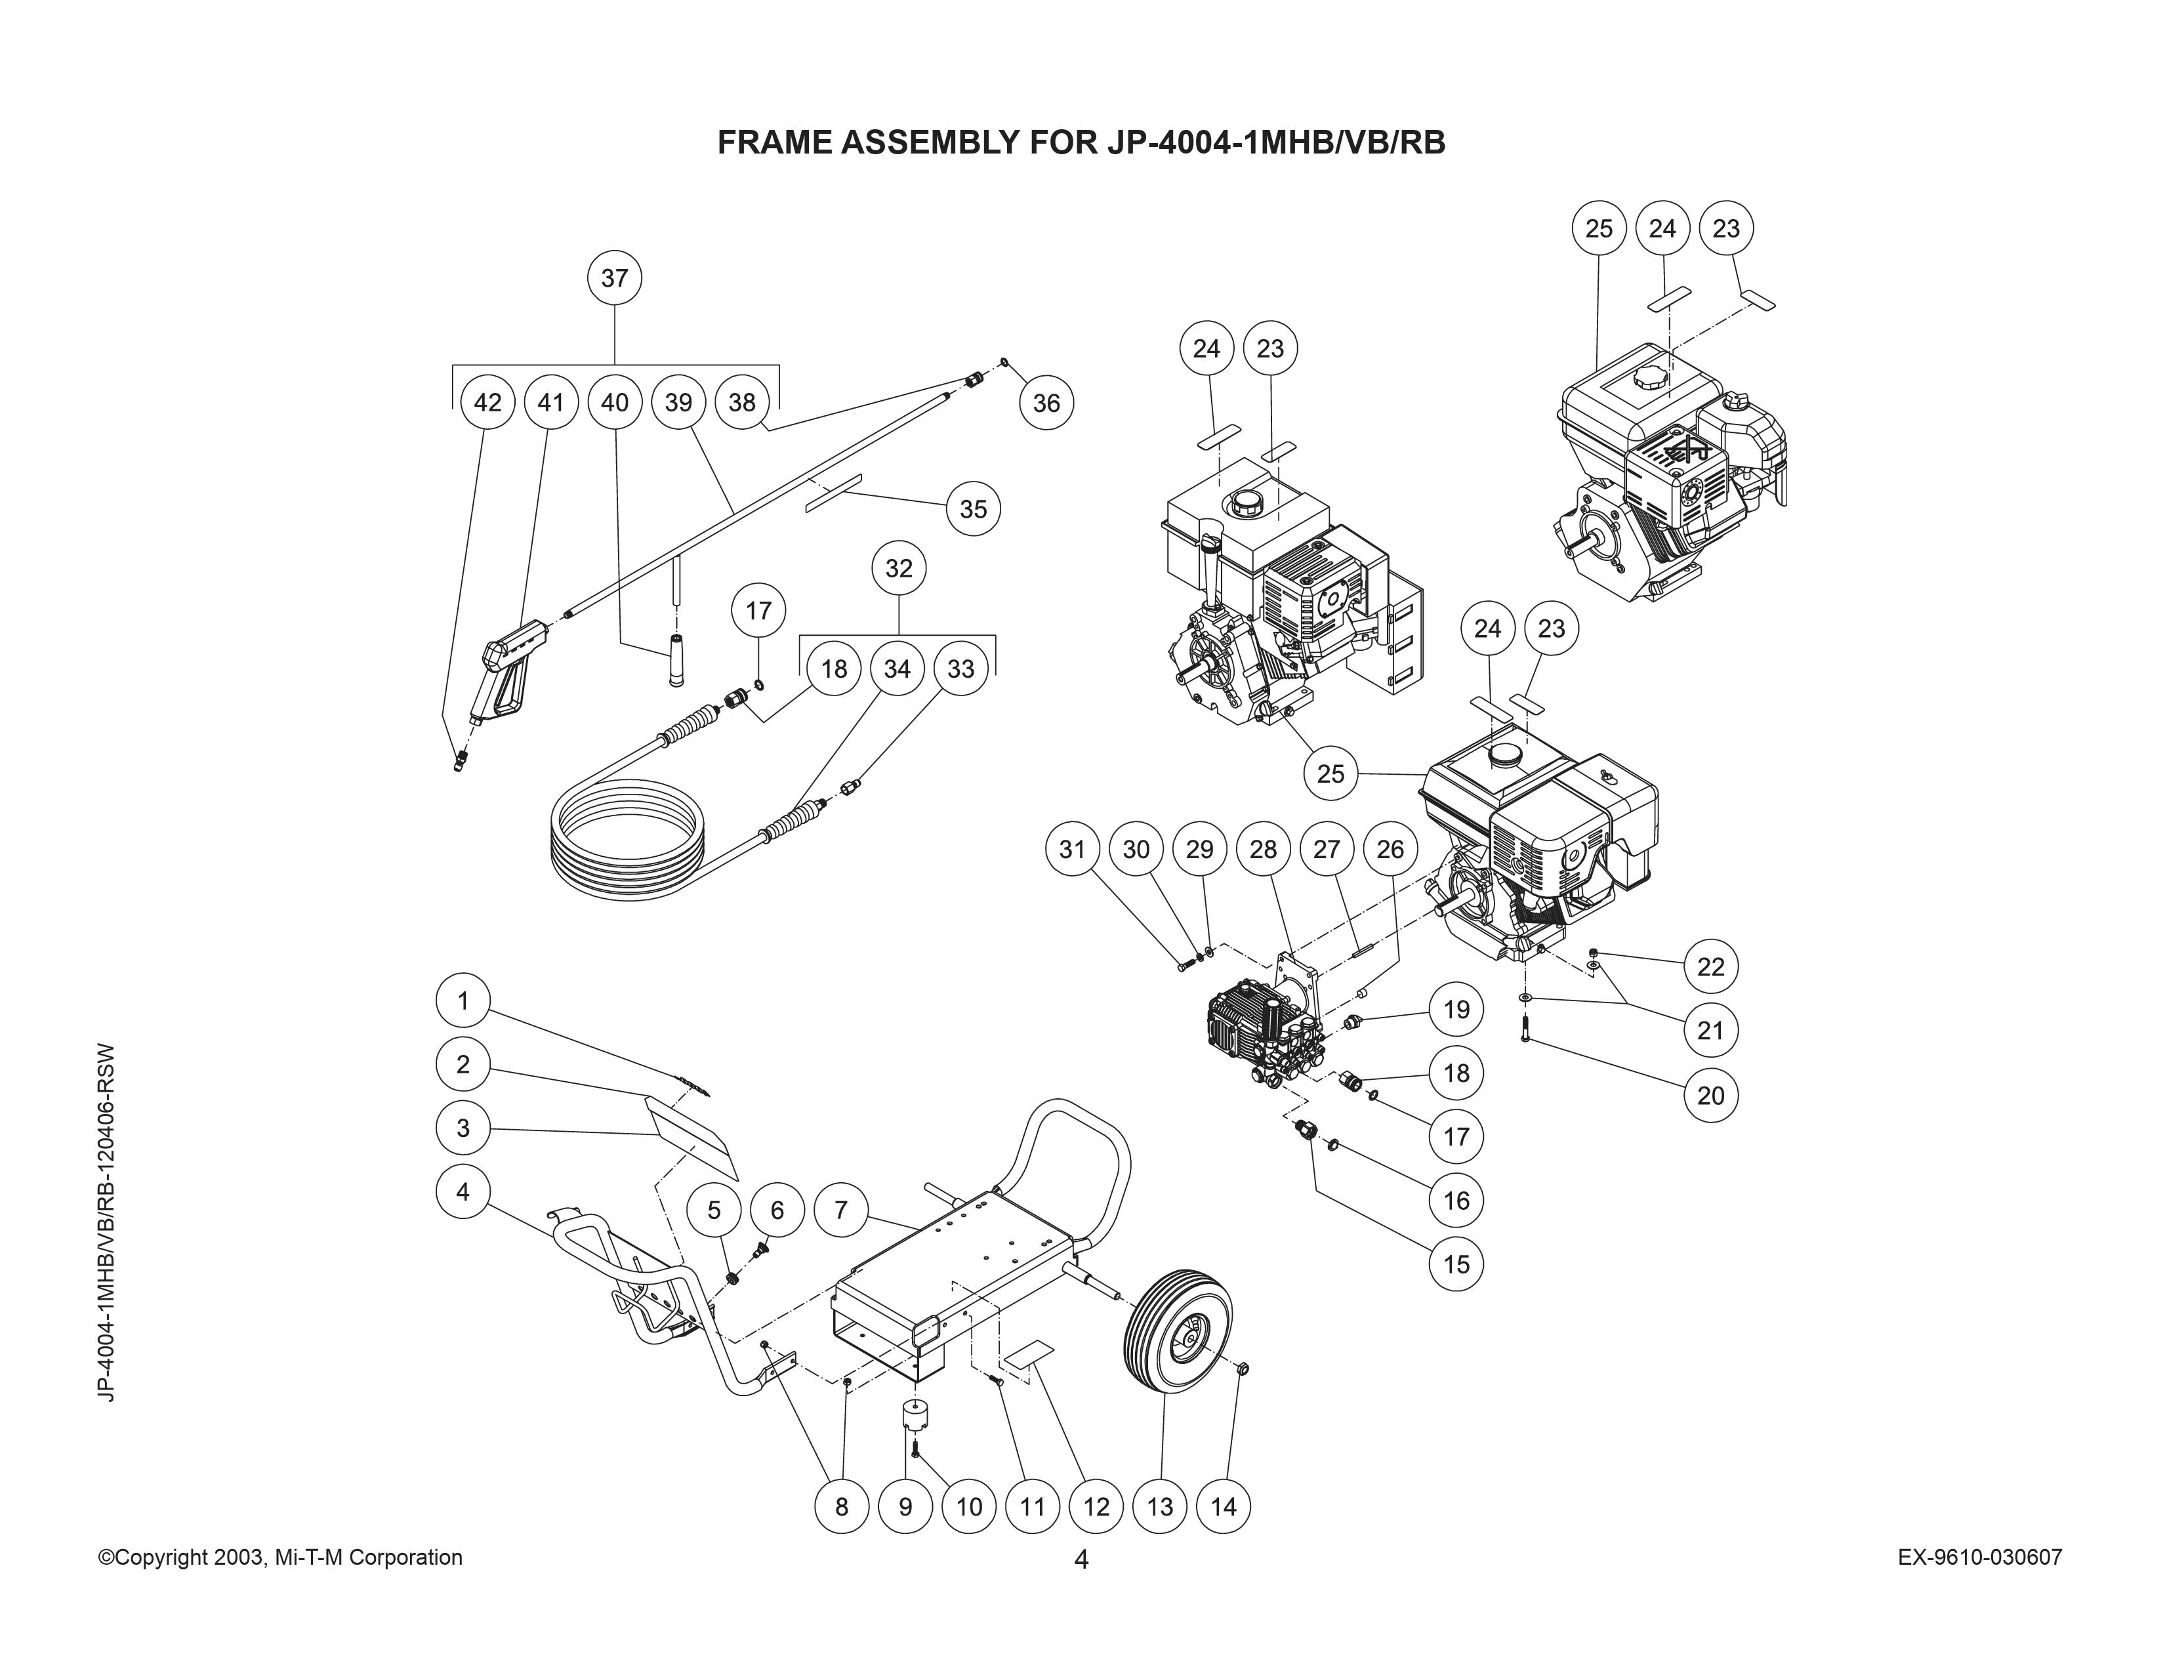 JP-4004-1MHB Pressure Washer replacement Parts, Pumps, repair kits, breakdowns & manuals.